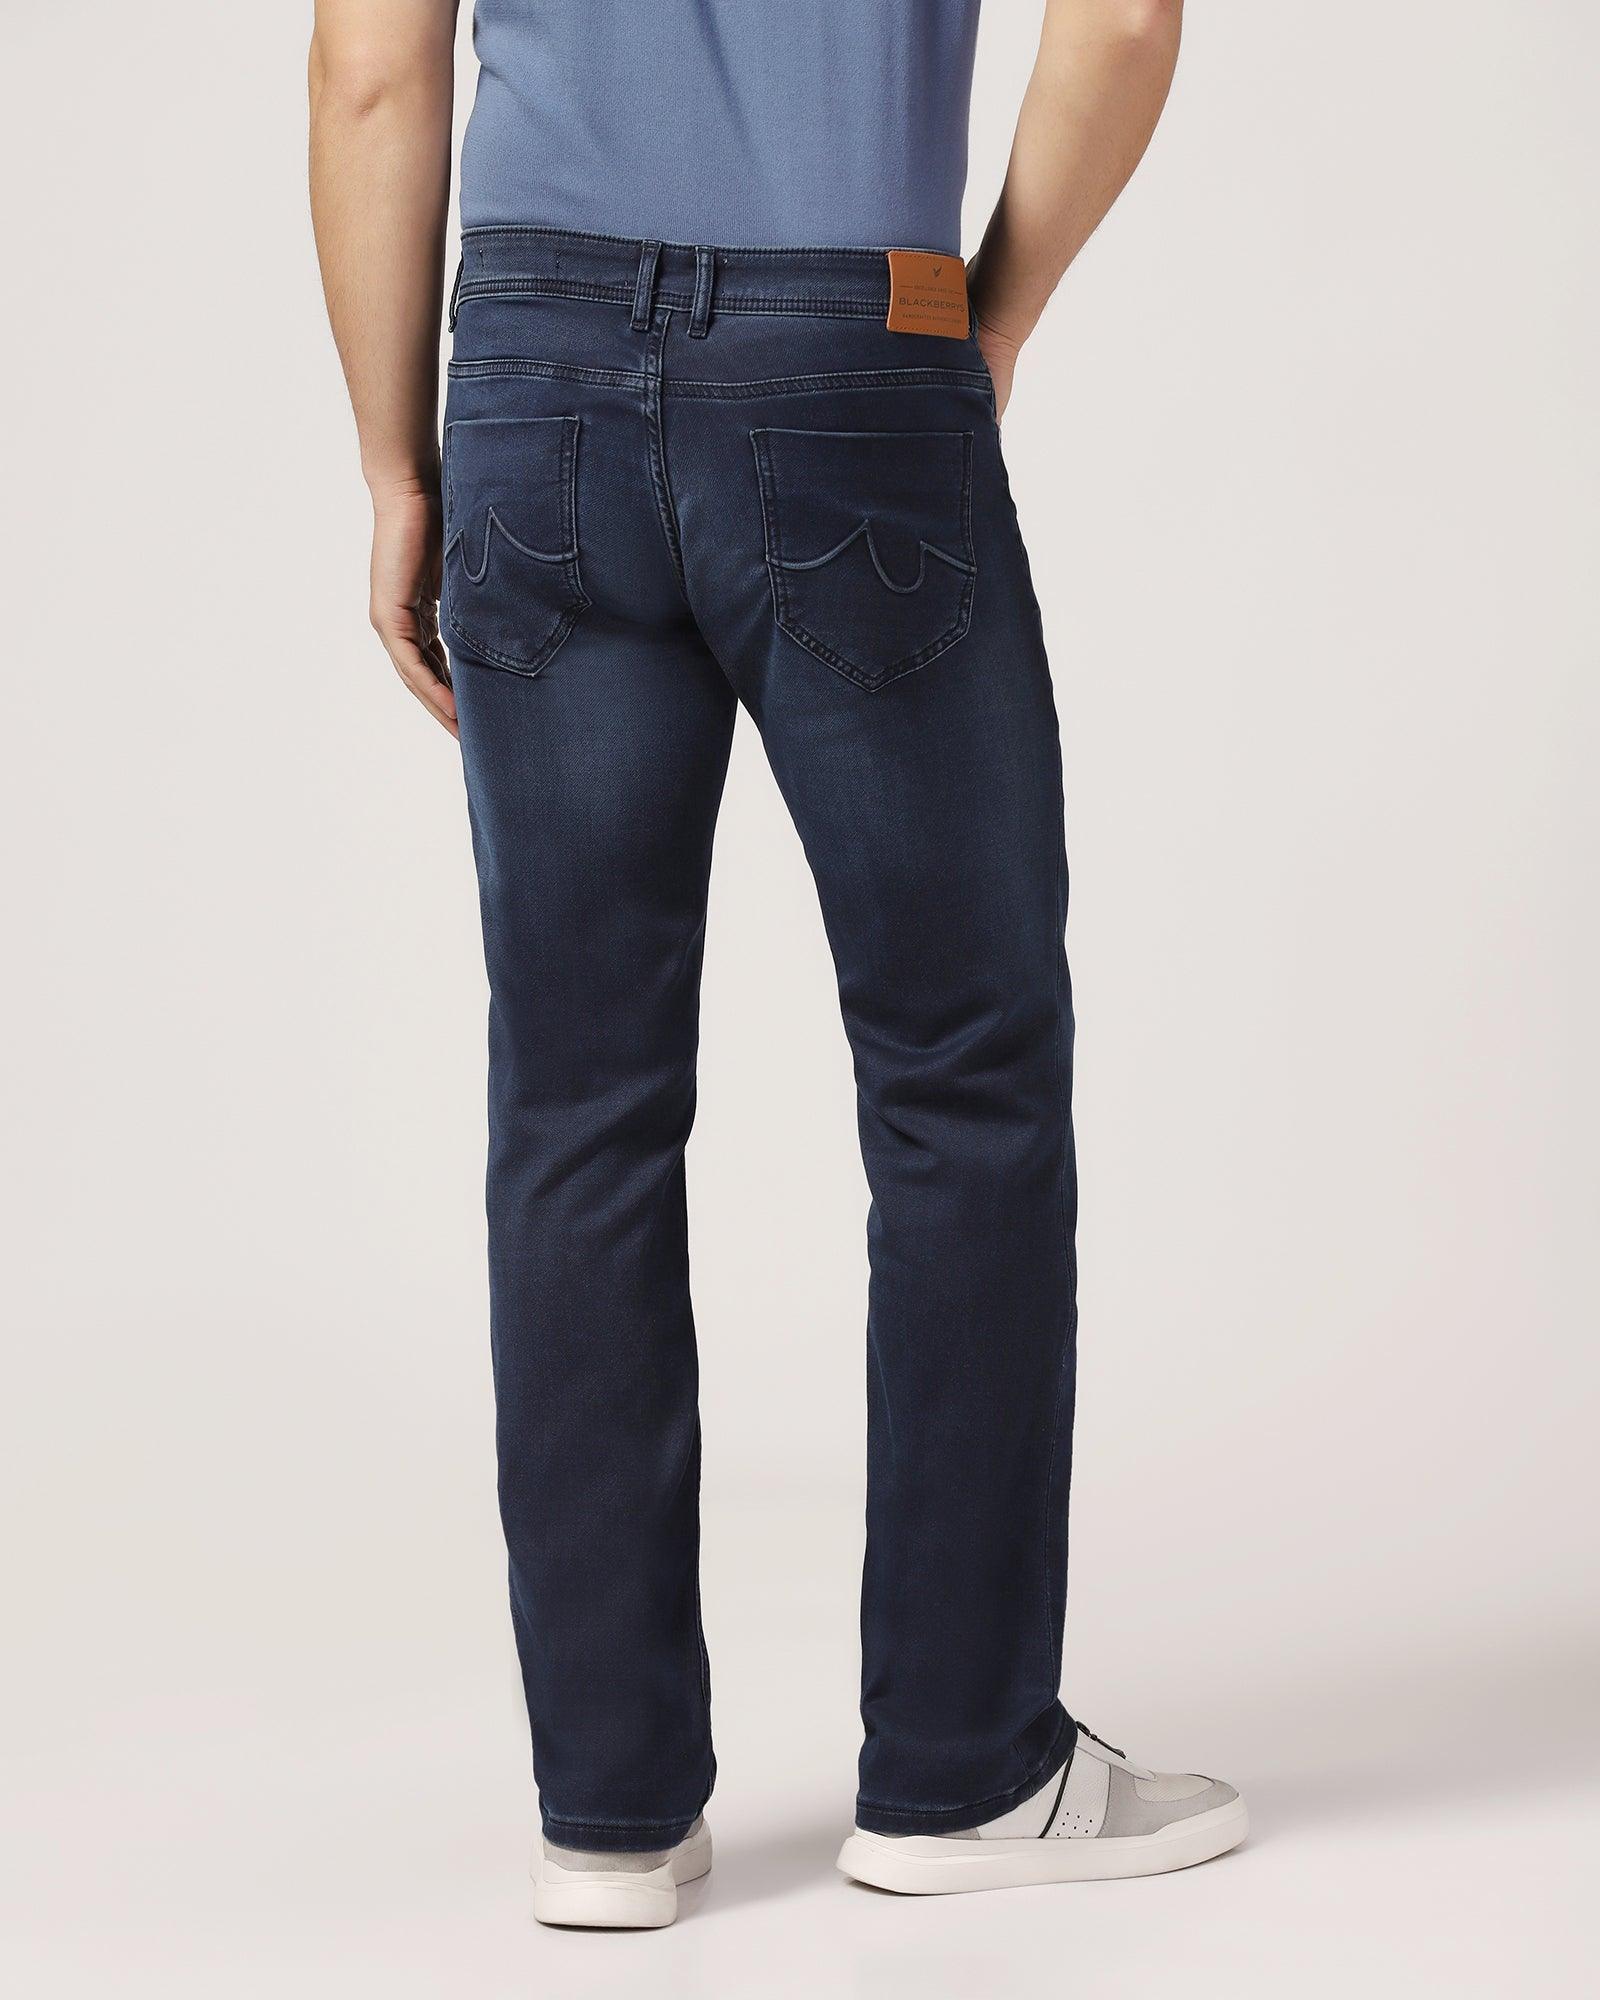 Straight Comfort Duke Fit Indigo Textured Jeans - Alek